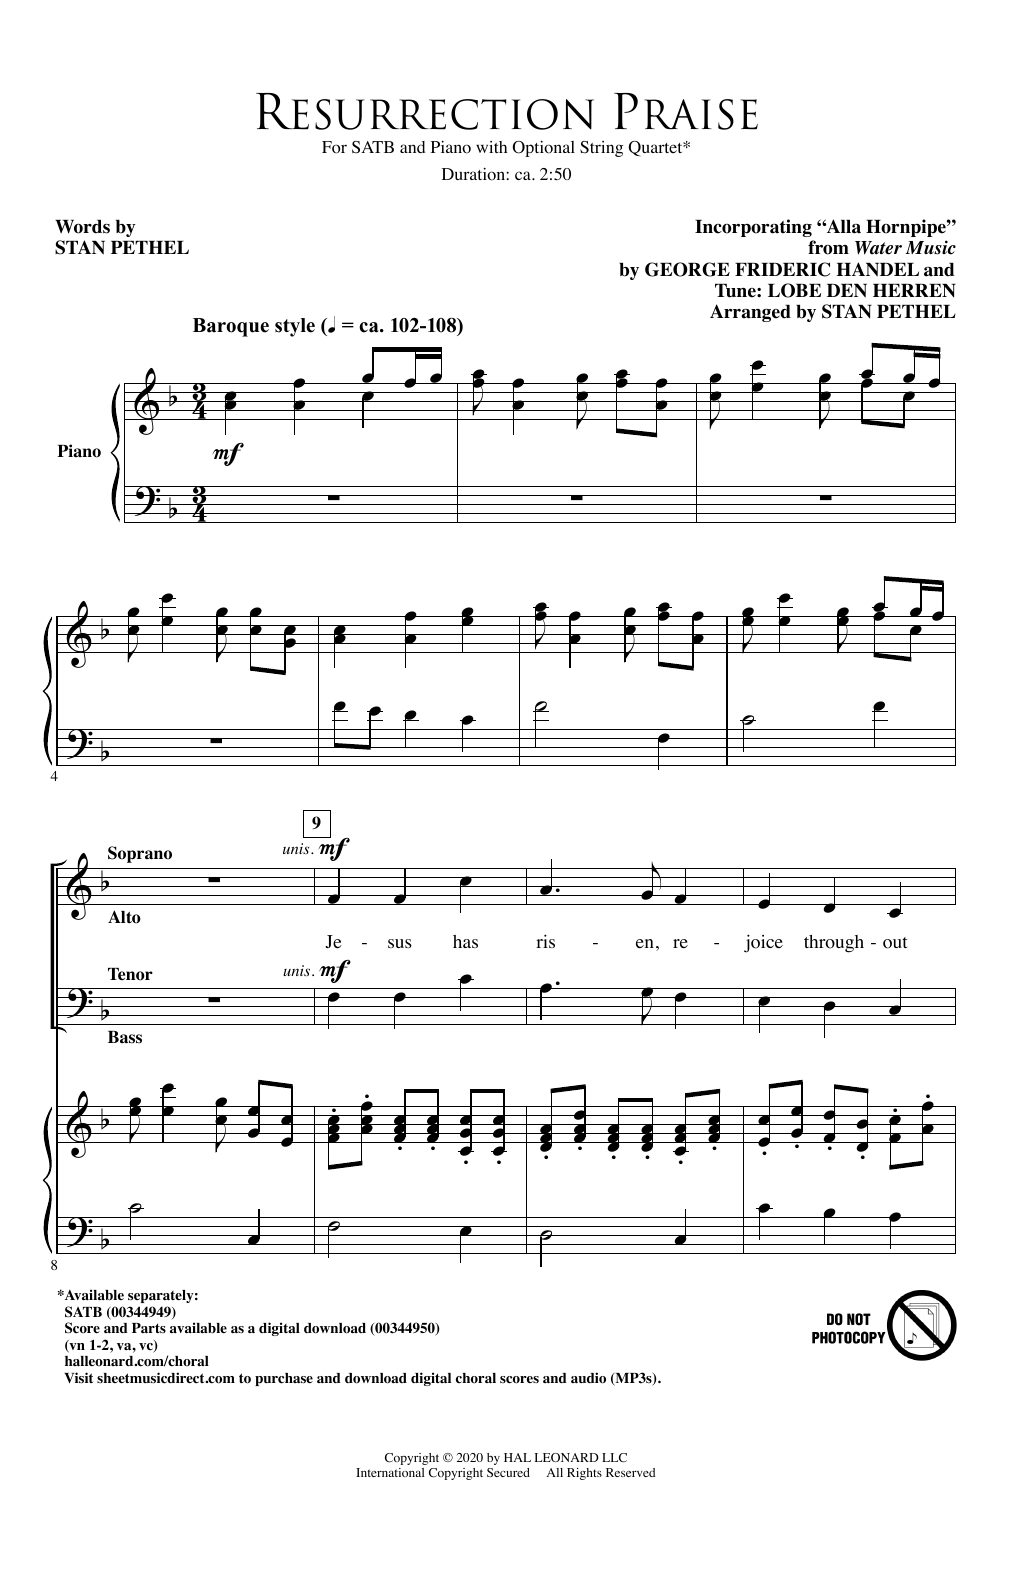 Stan Pethel Resurrection Praise sheet music notes and chords arranged for SATB Choir